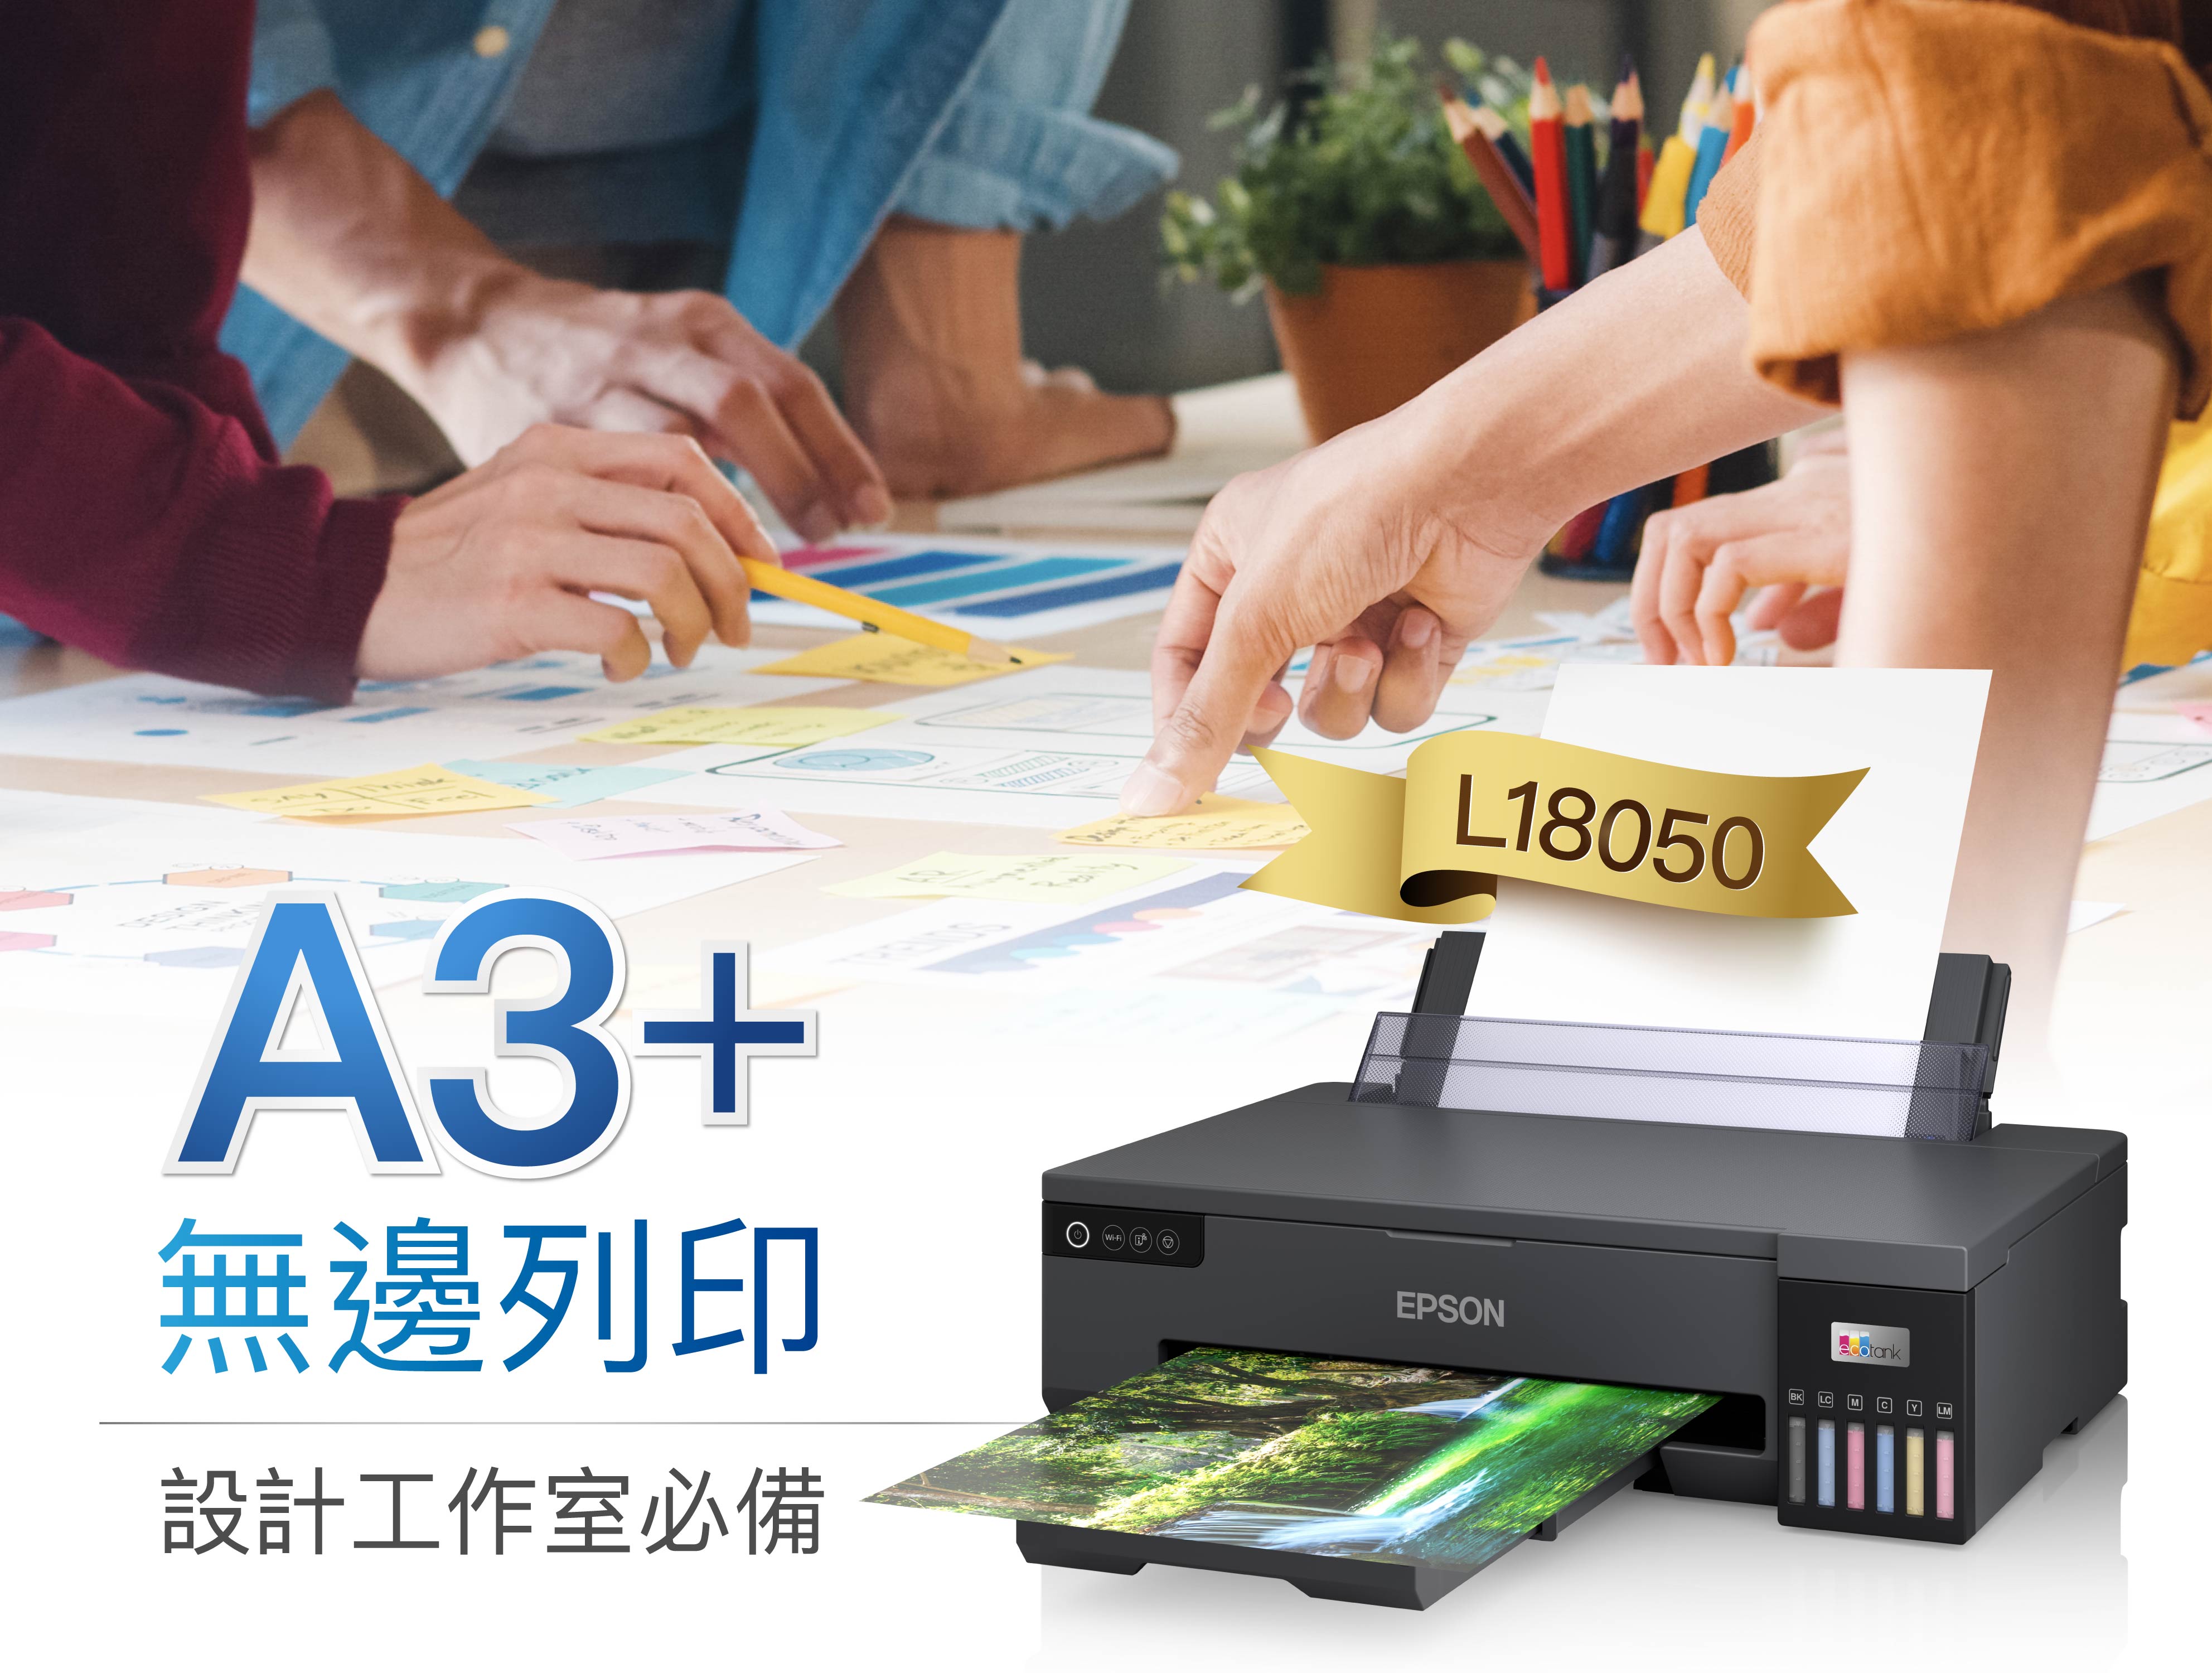 A3+無邊列印設計工作室必備Wi-Fi L18050EPSONecotankBKLCMY LM